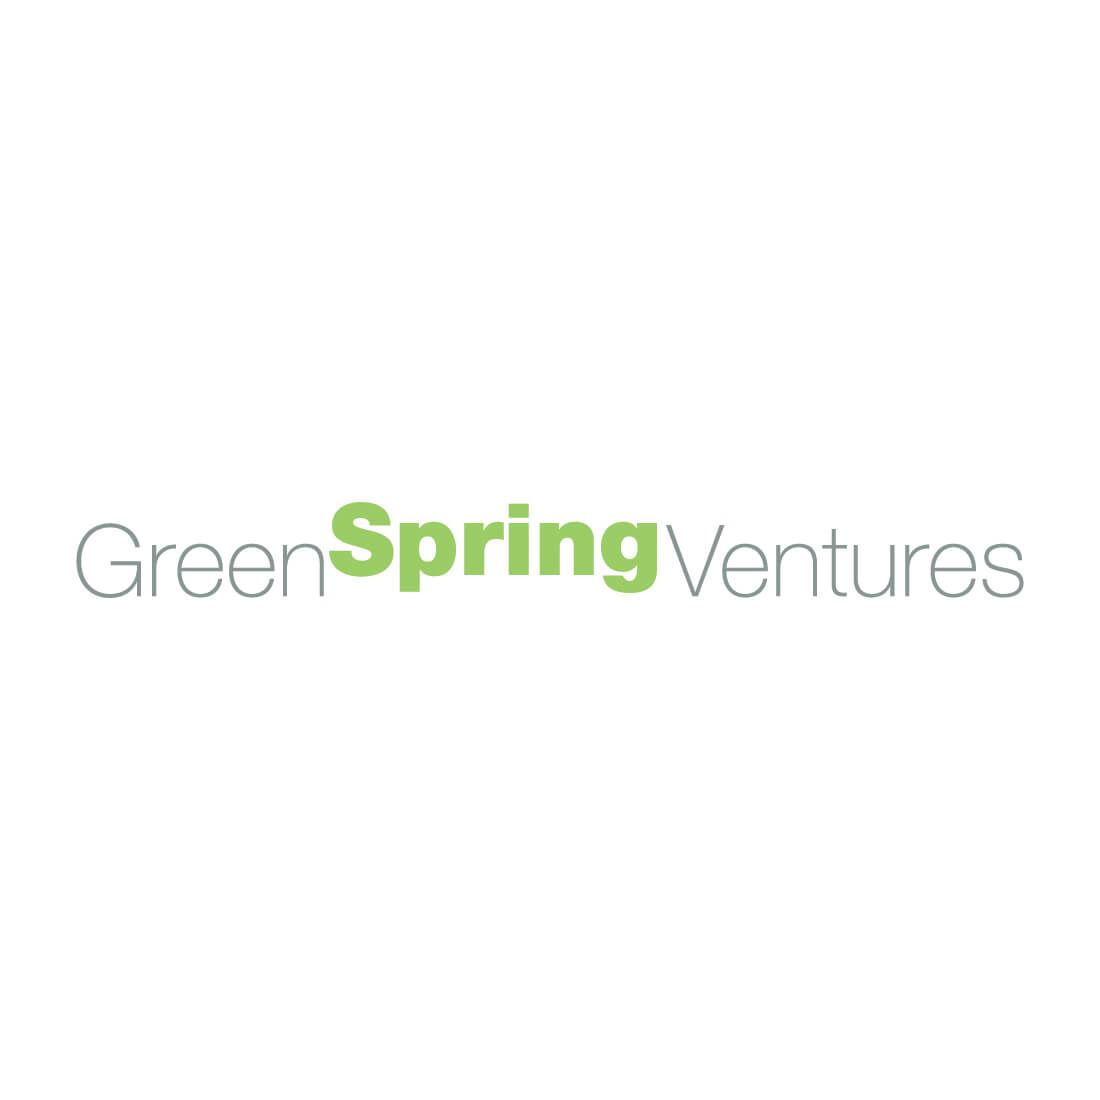 Green Spring Ventures